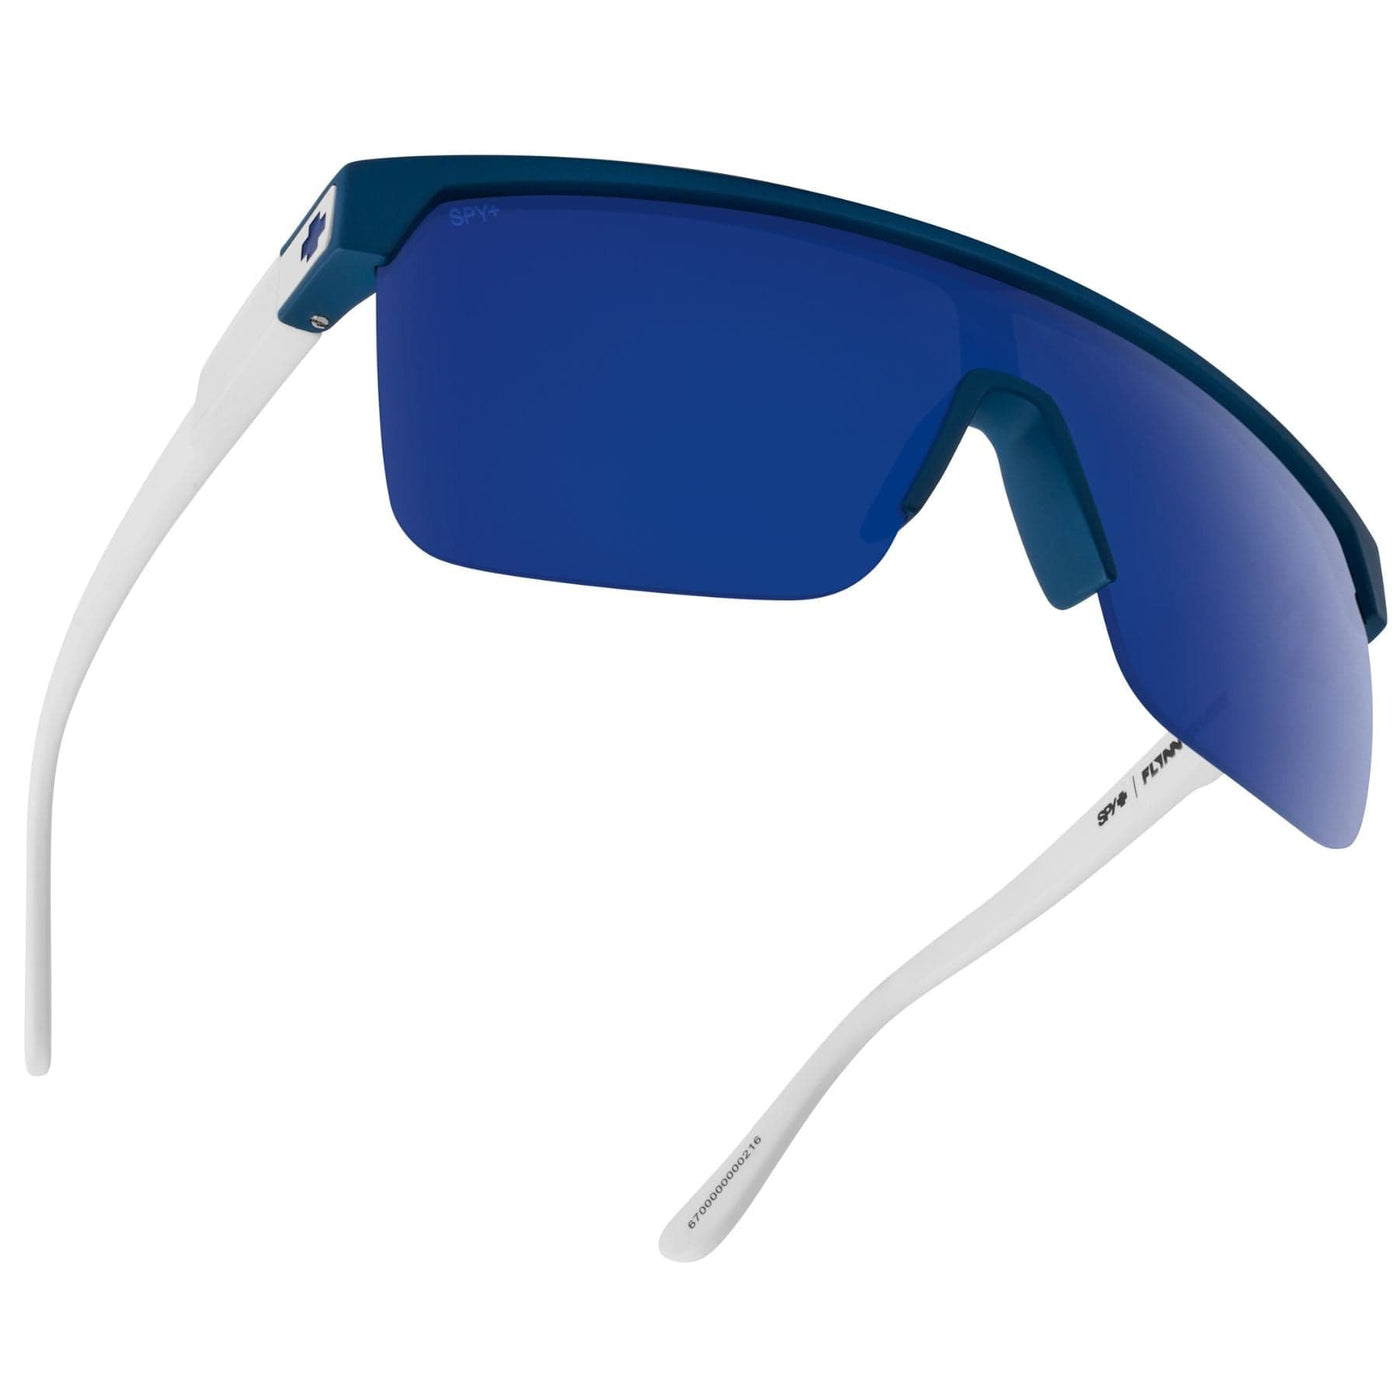 SPY FLYNN 5050 Sunglasses, Happy Lens - Blue 8Lines Shop - Fast Shipping